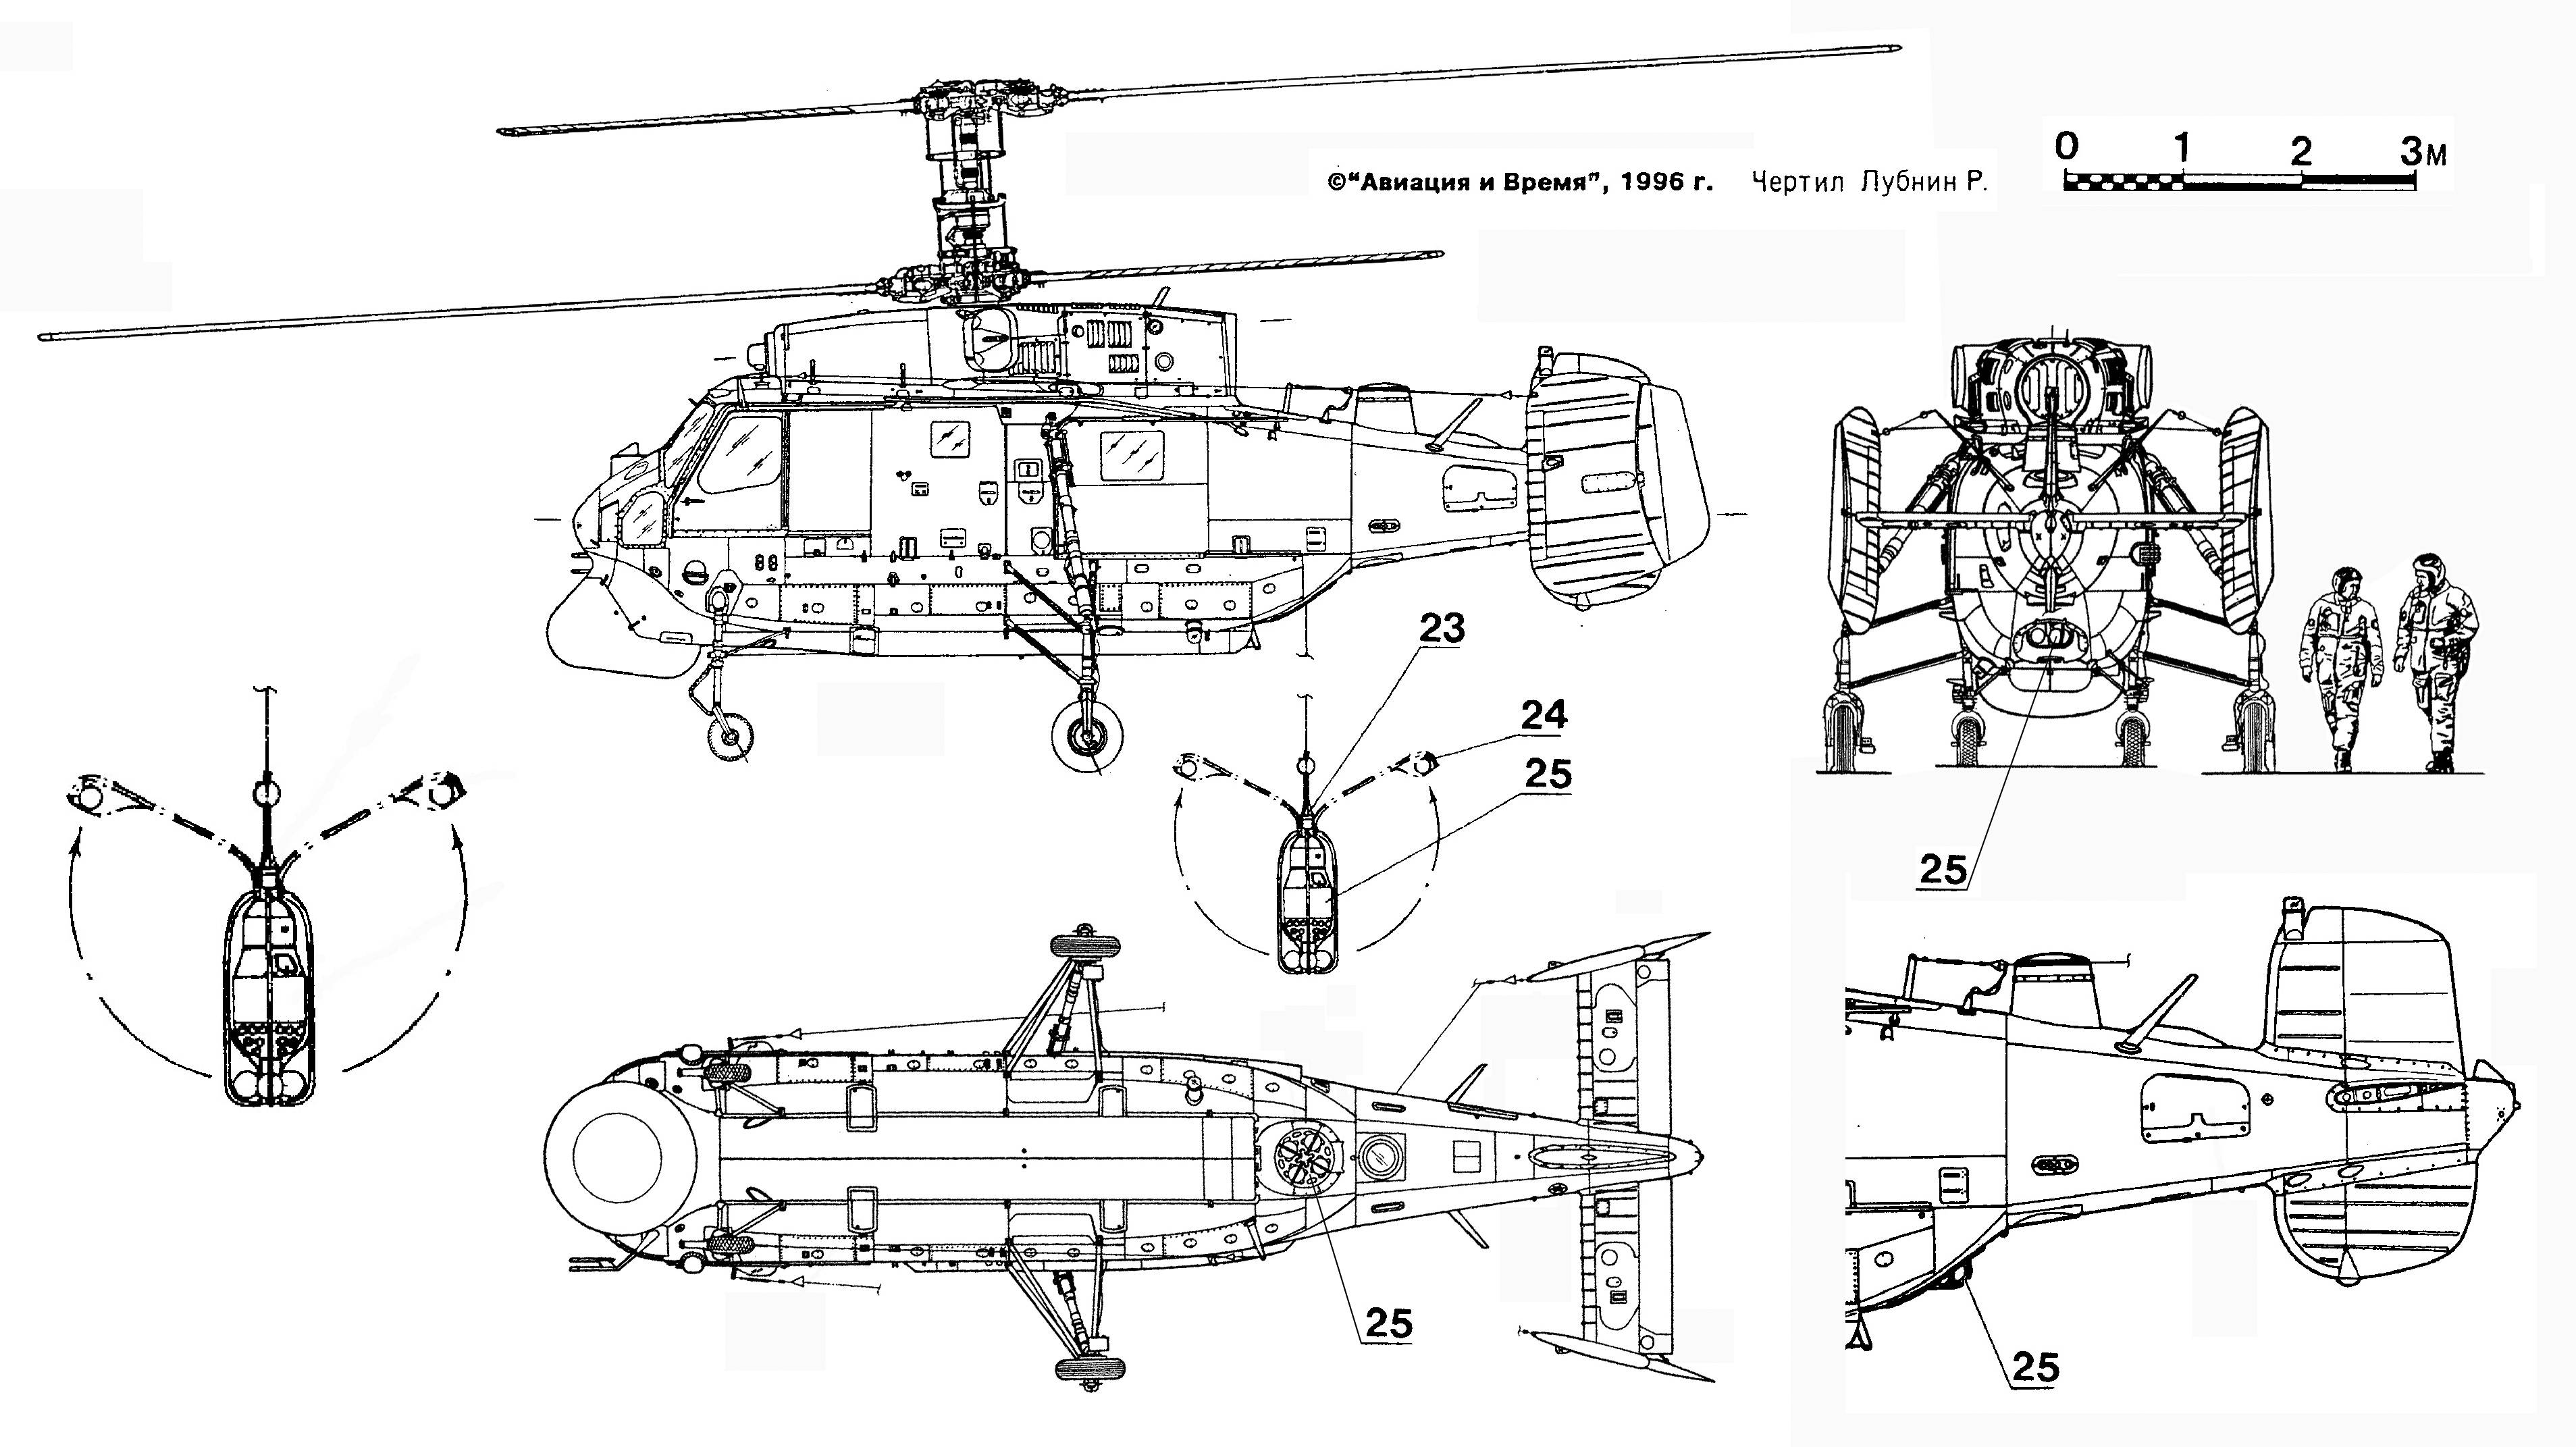 Вертолёт ка-27 — викивоины